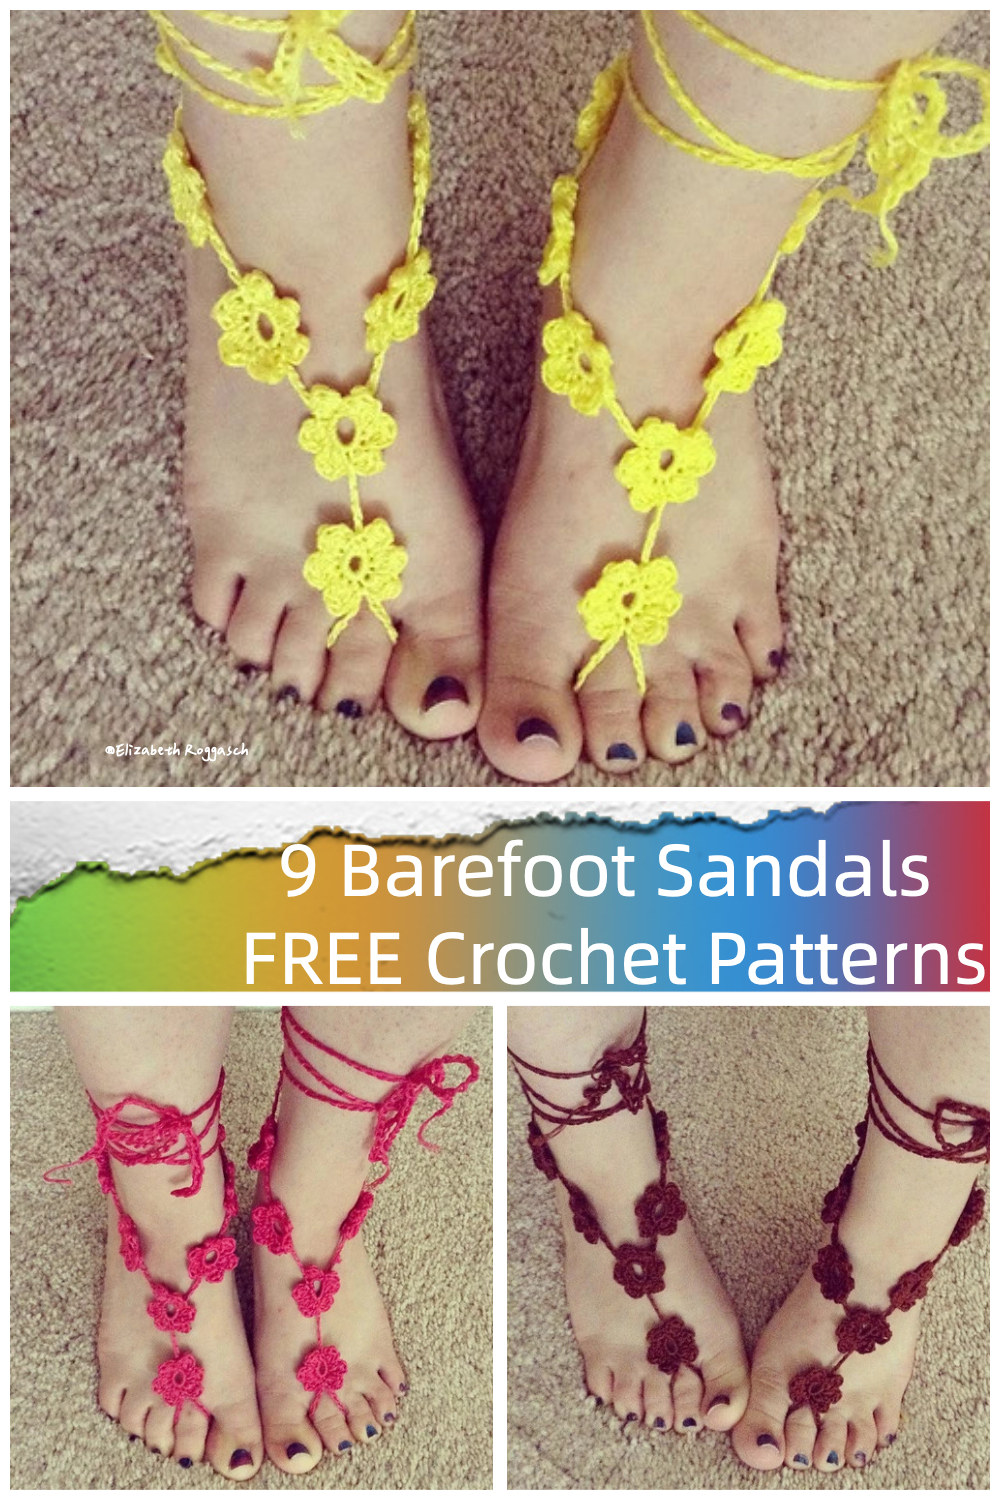 9 Barefoot Sandals FREE Crochet Patterns  